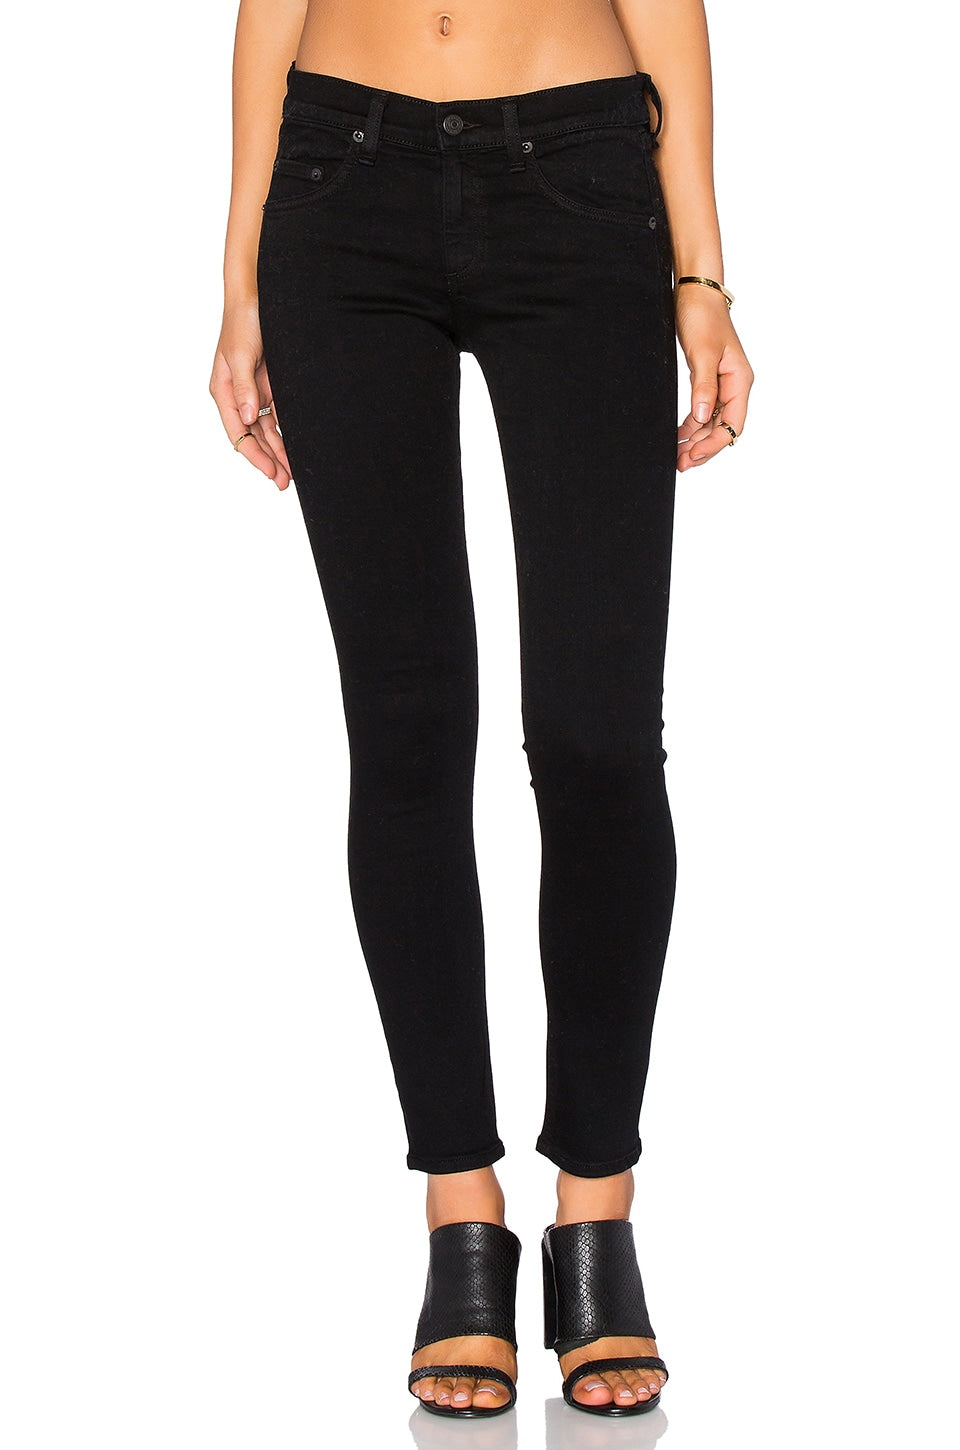 Capri black jeans